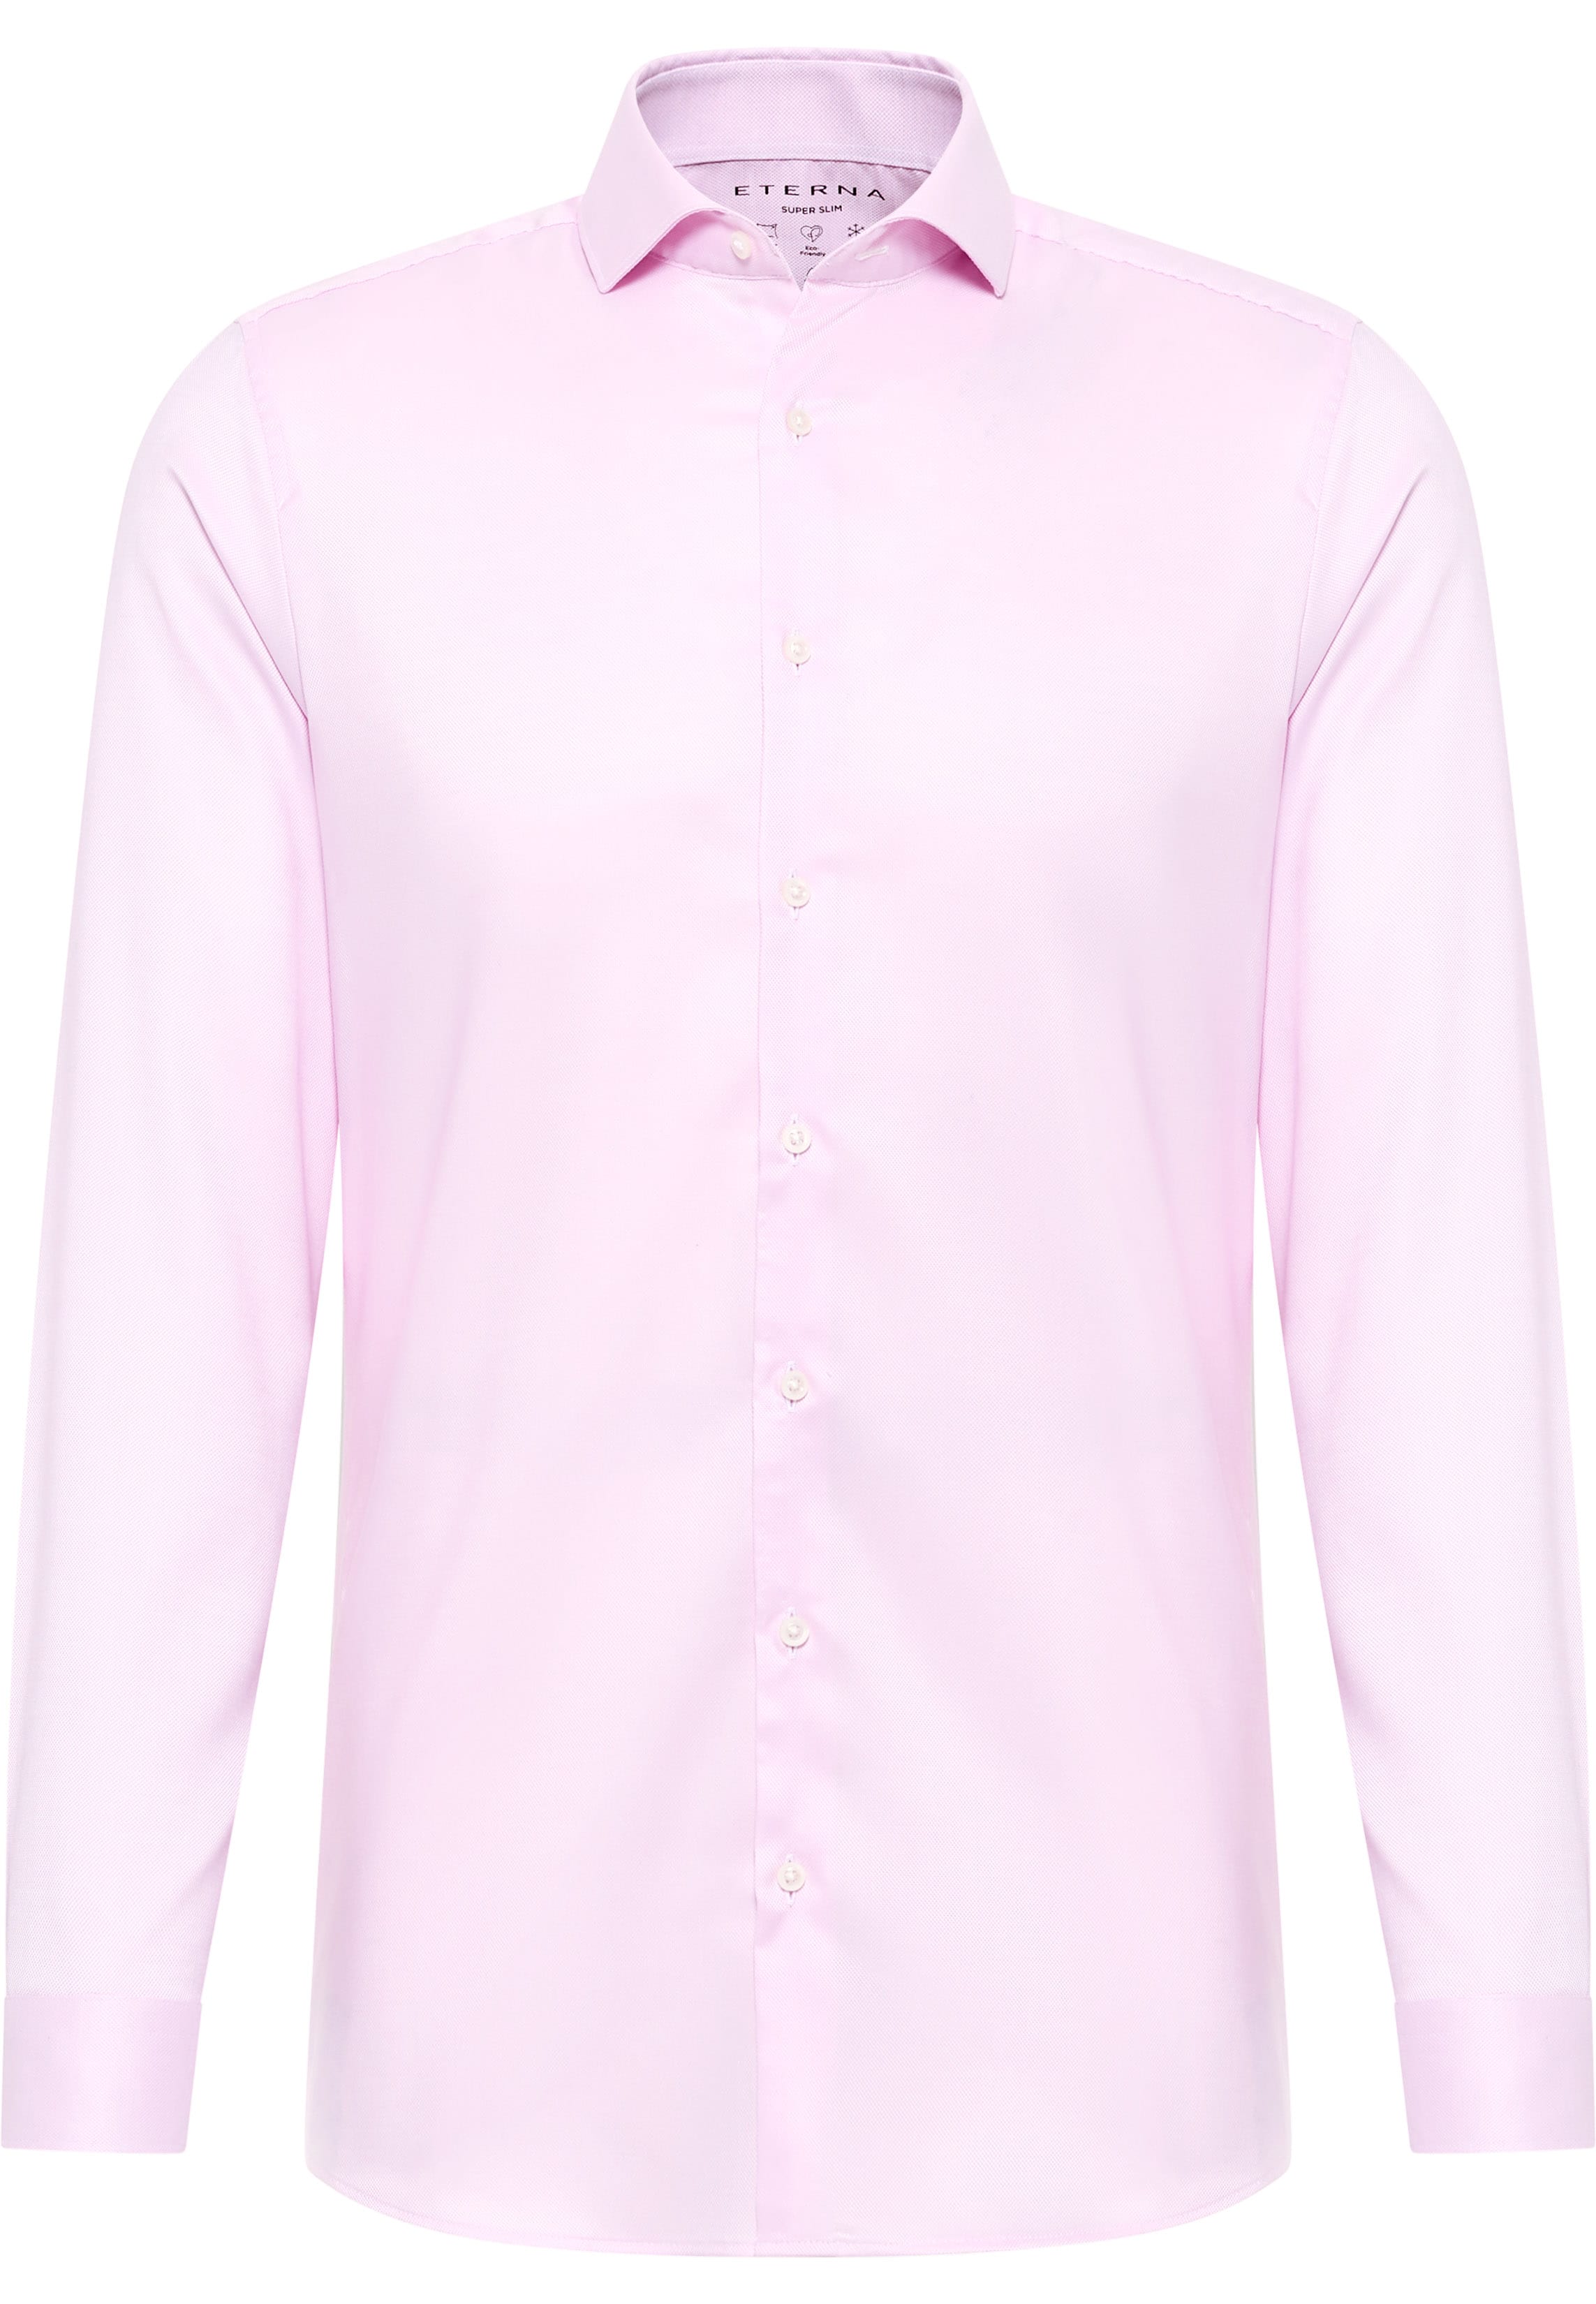 SUPER SLIM Performance Shirt in rose structured